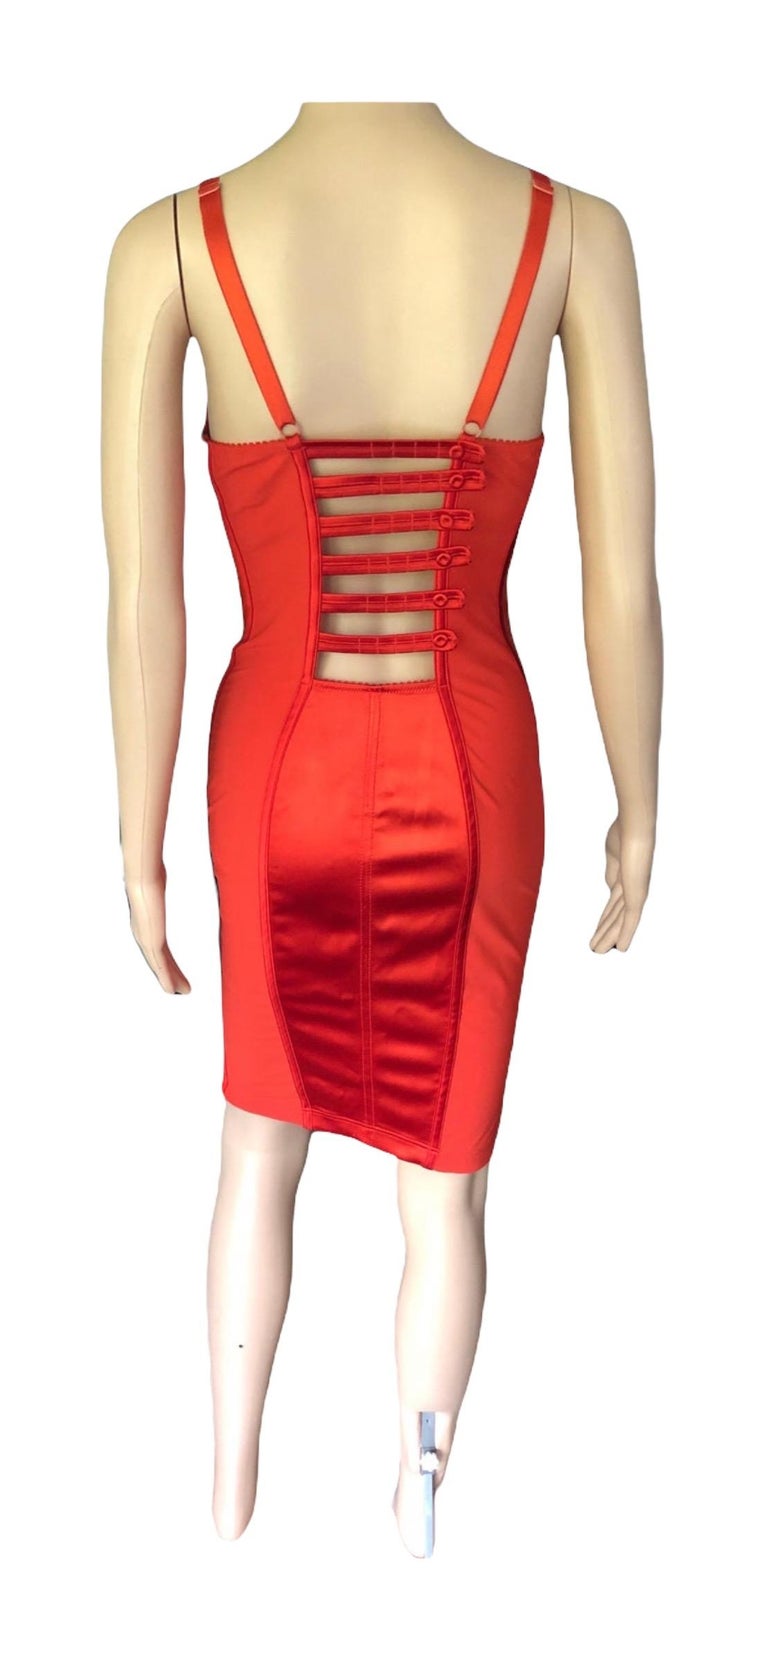 Jean Paul Gaultier for La Perla c. 2010 Cone Bra Corset Bondage Red Dress For Sale 9